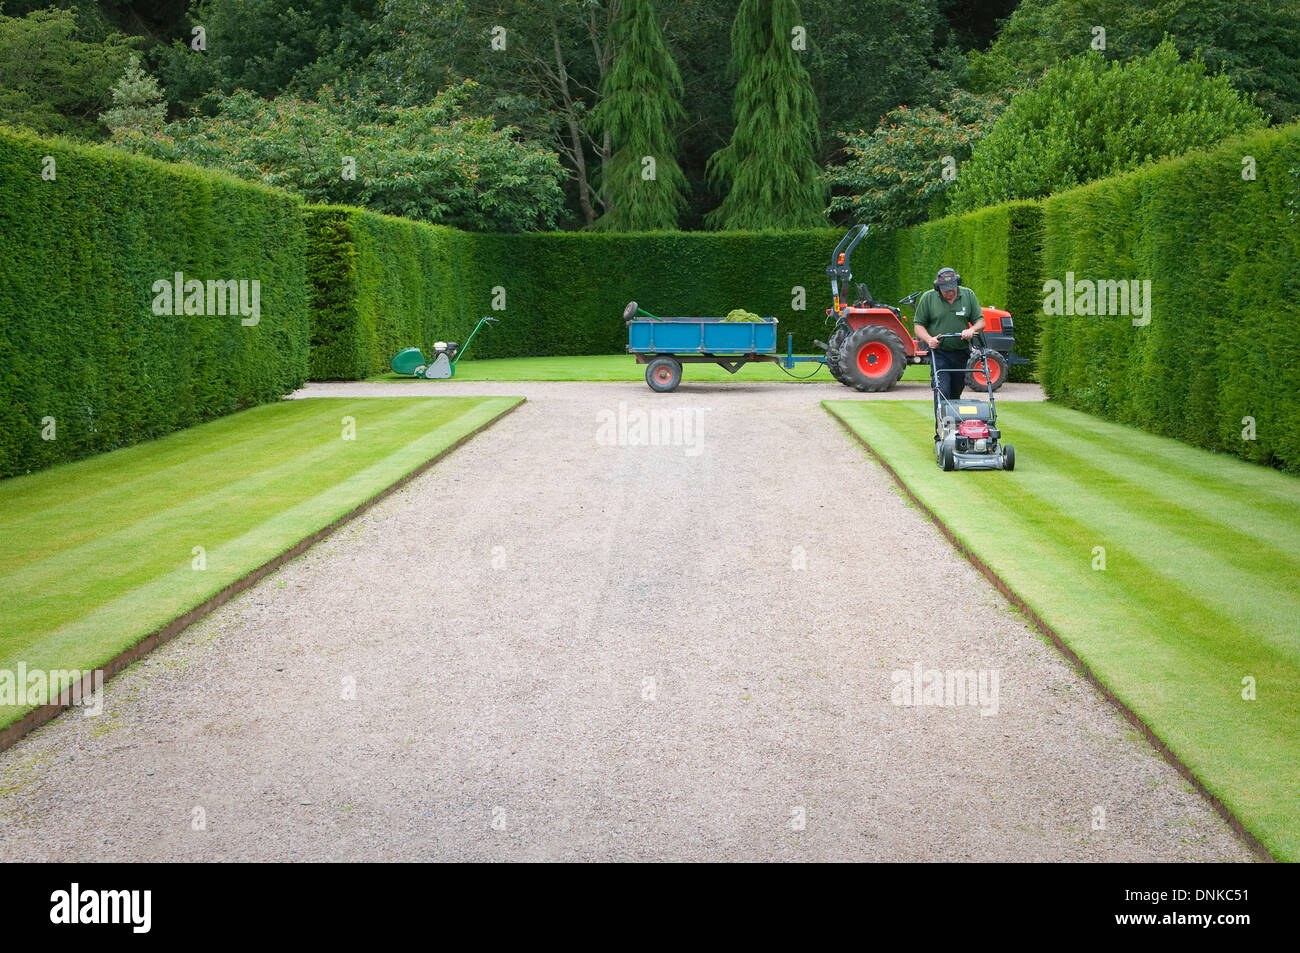 Lawn maintenance at RHS Rosemoor Gardens, Devon, UK. Stock Photo